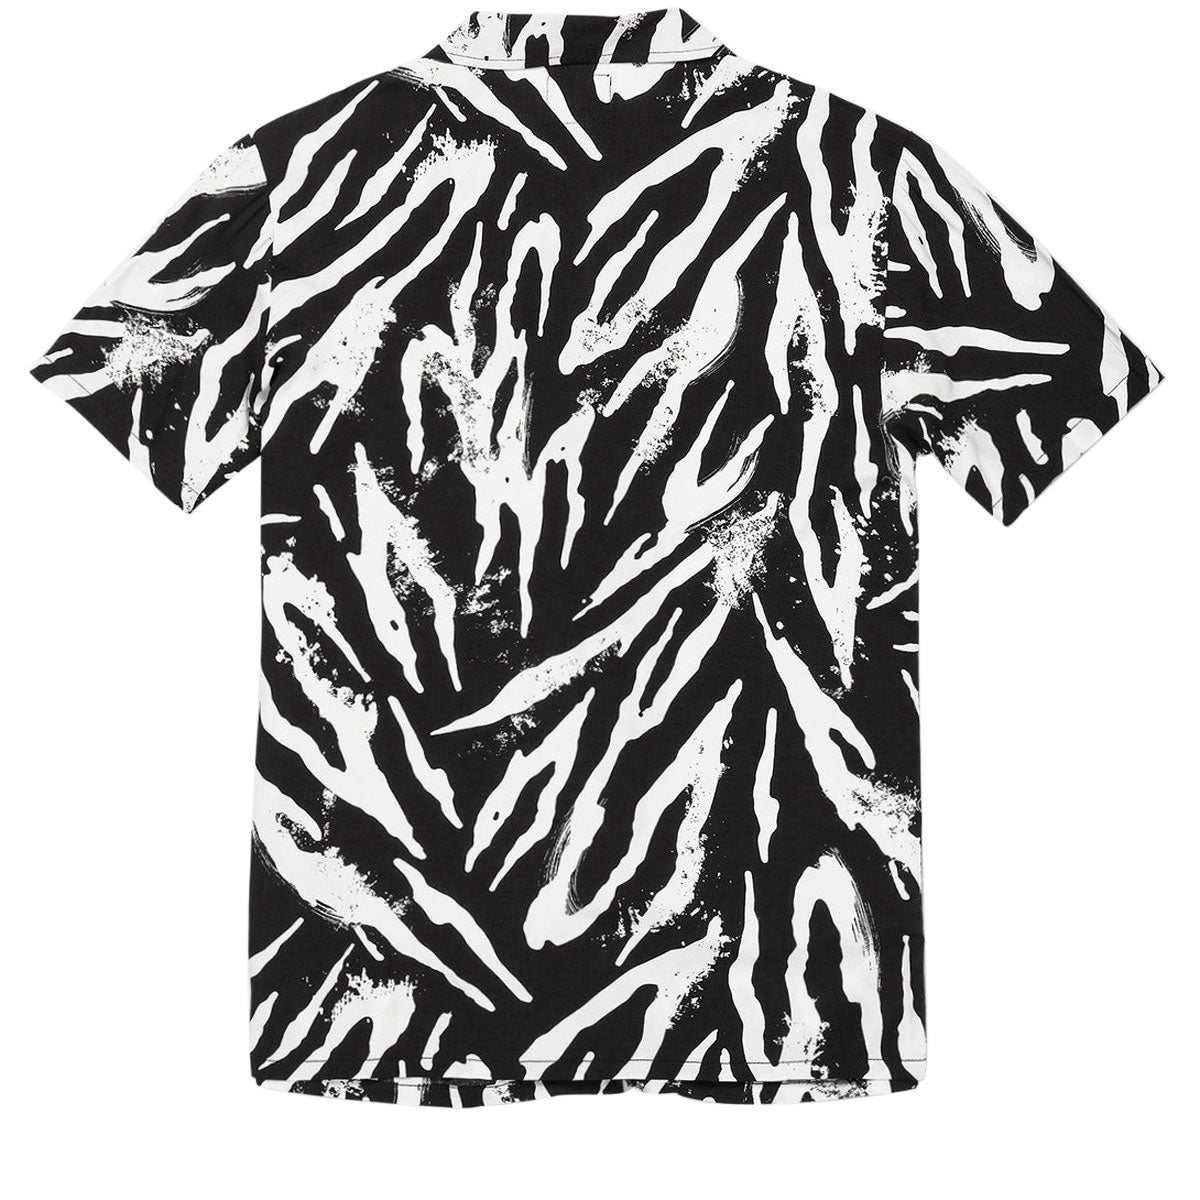 Volcom Stone Party Animals Shirt - Black image 3